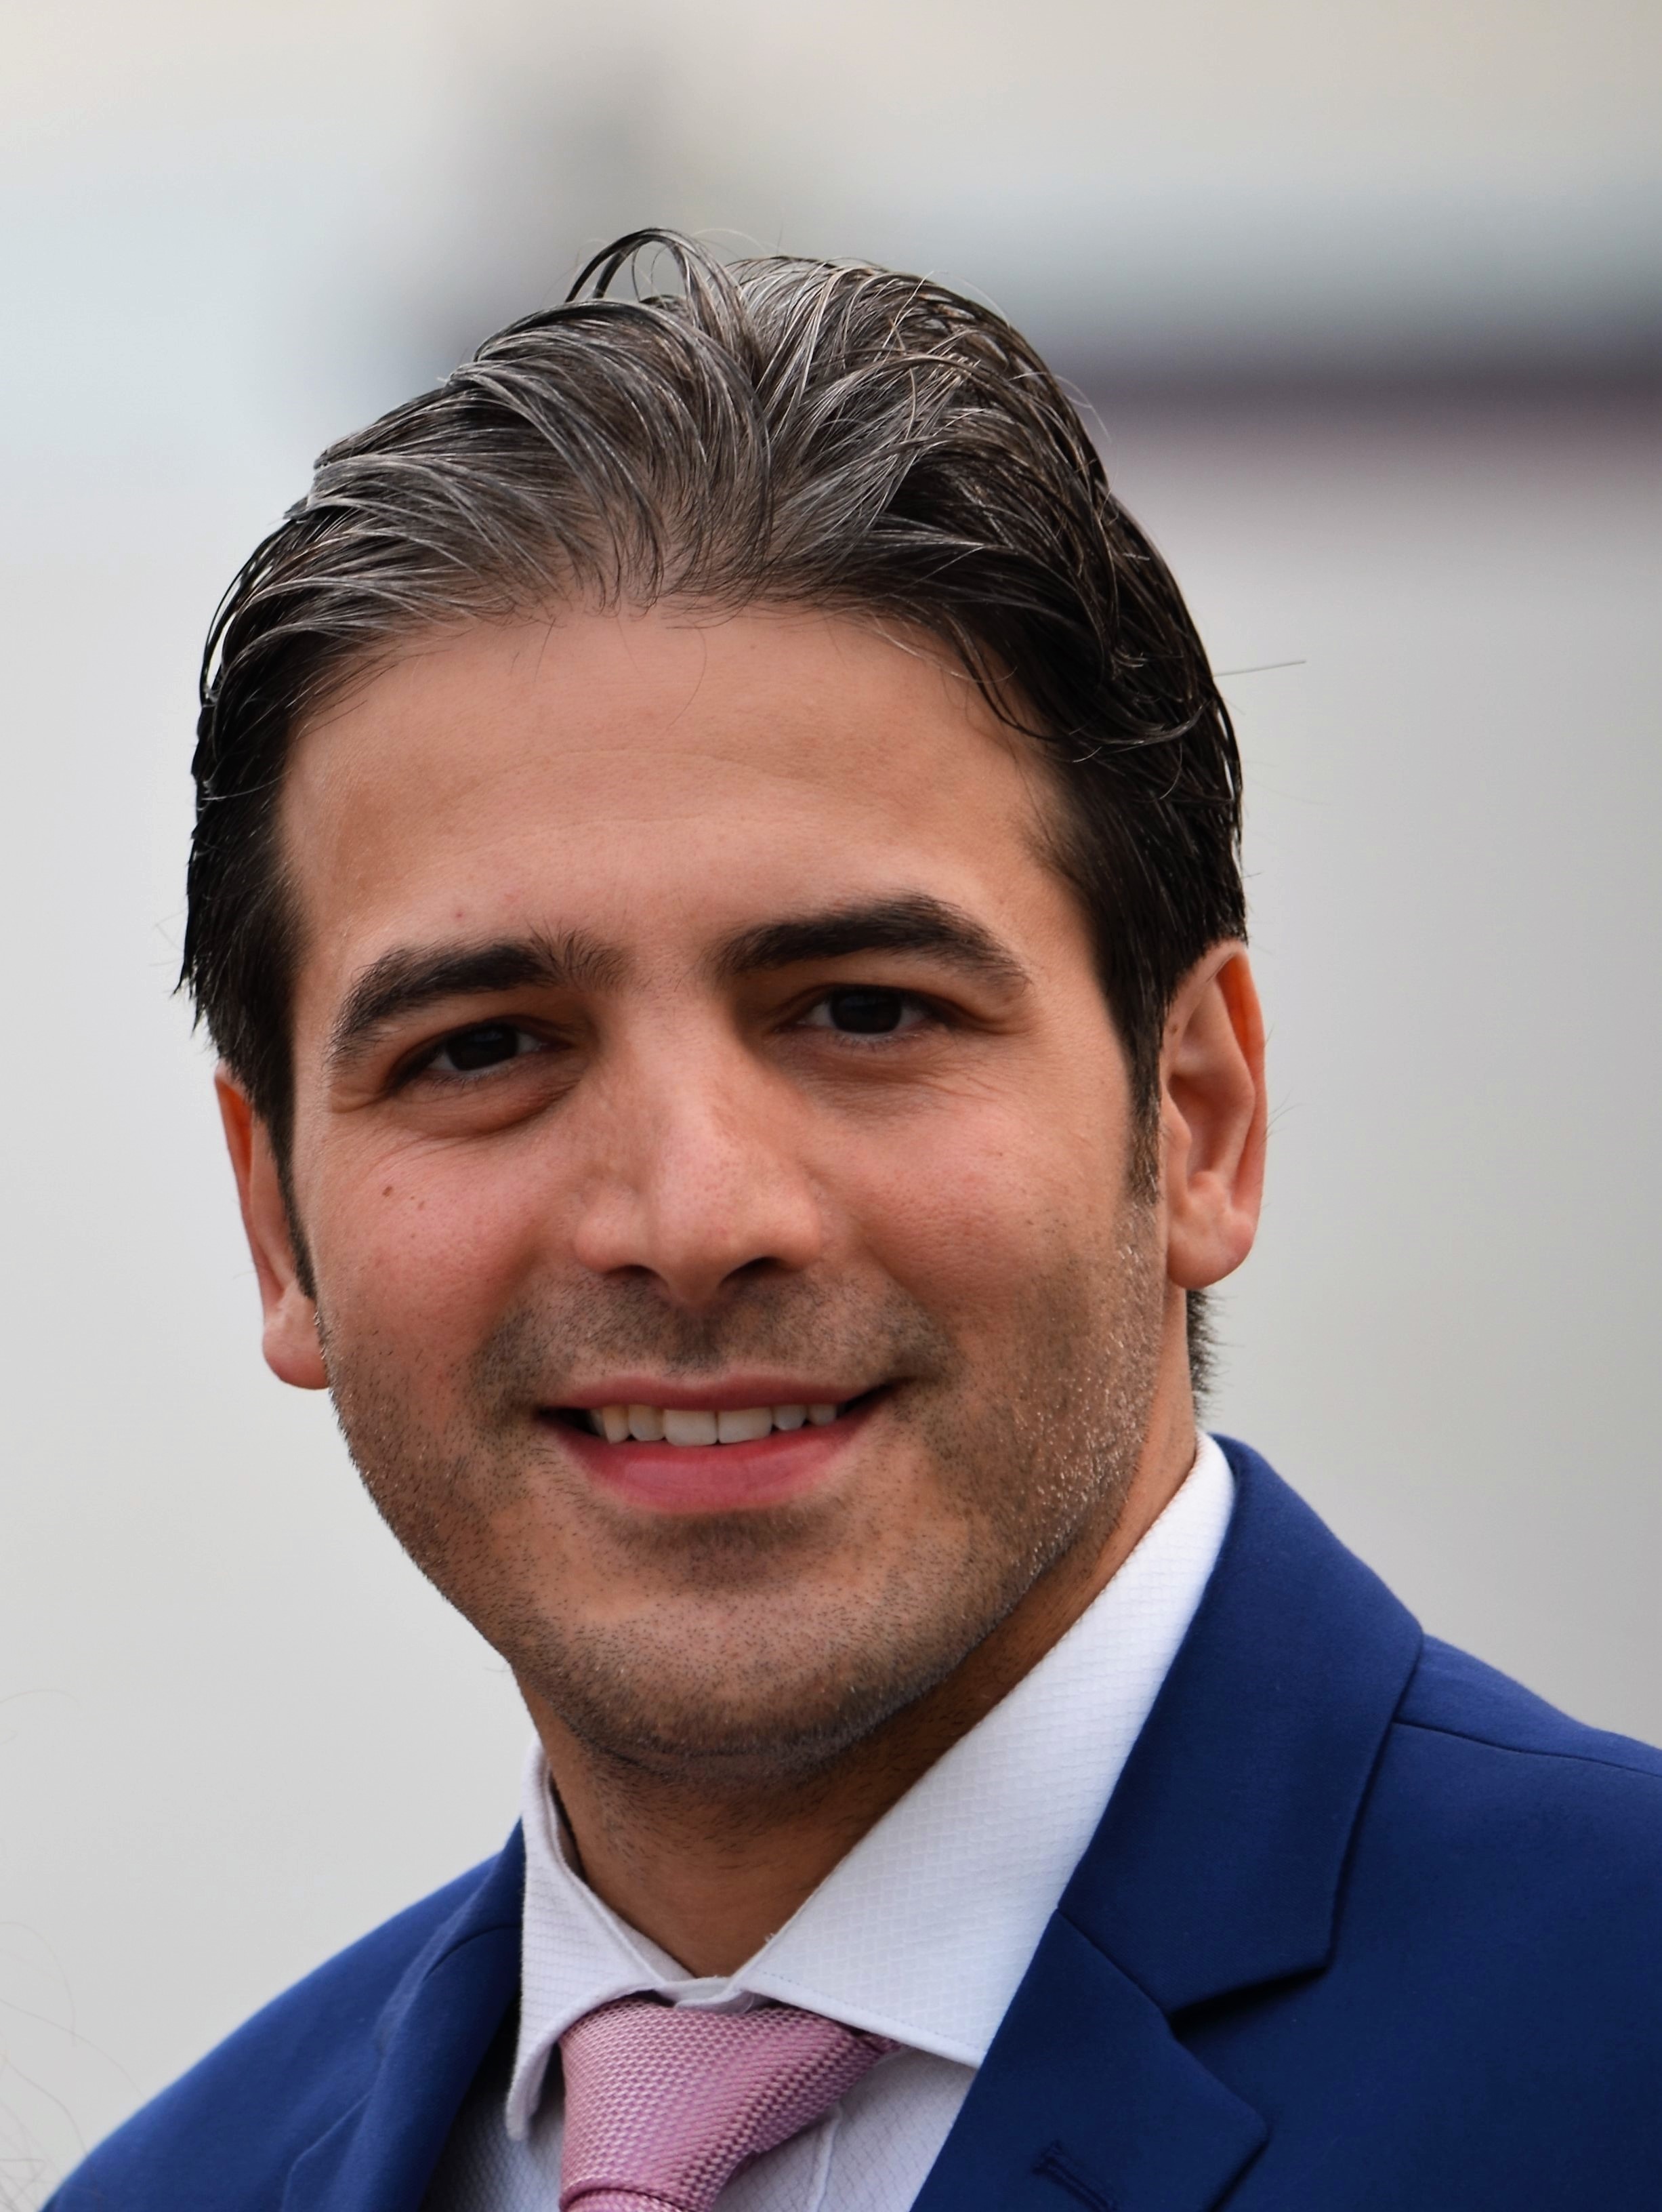 Reza Tavakoli is the president and CEO of Avestec.